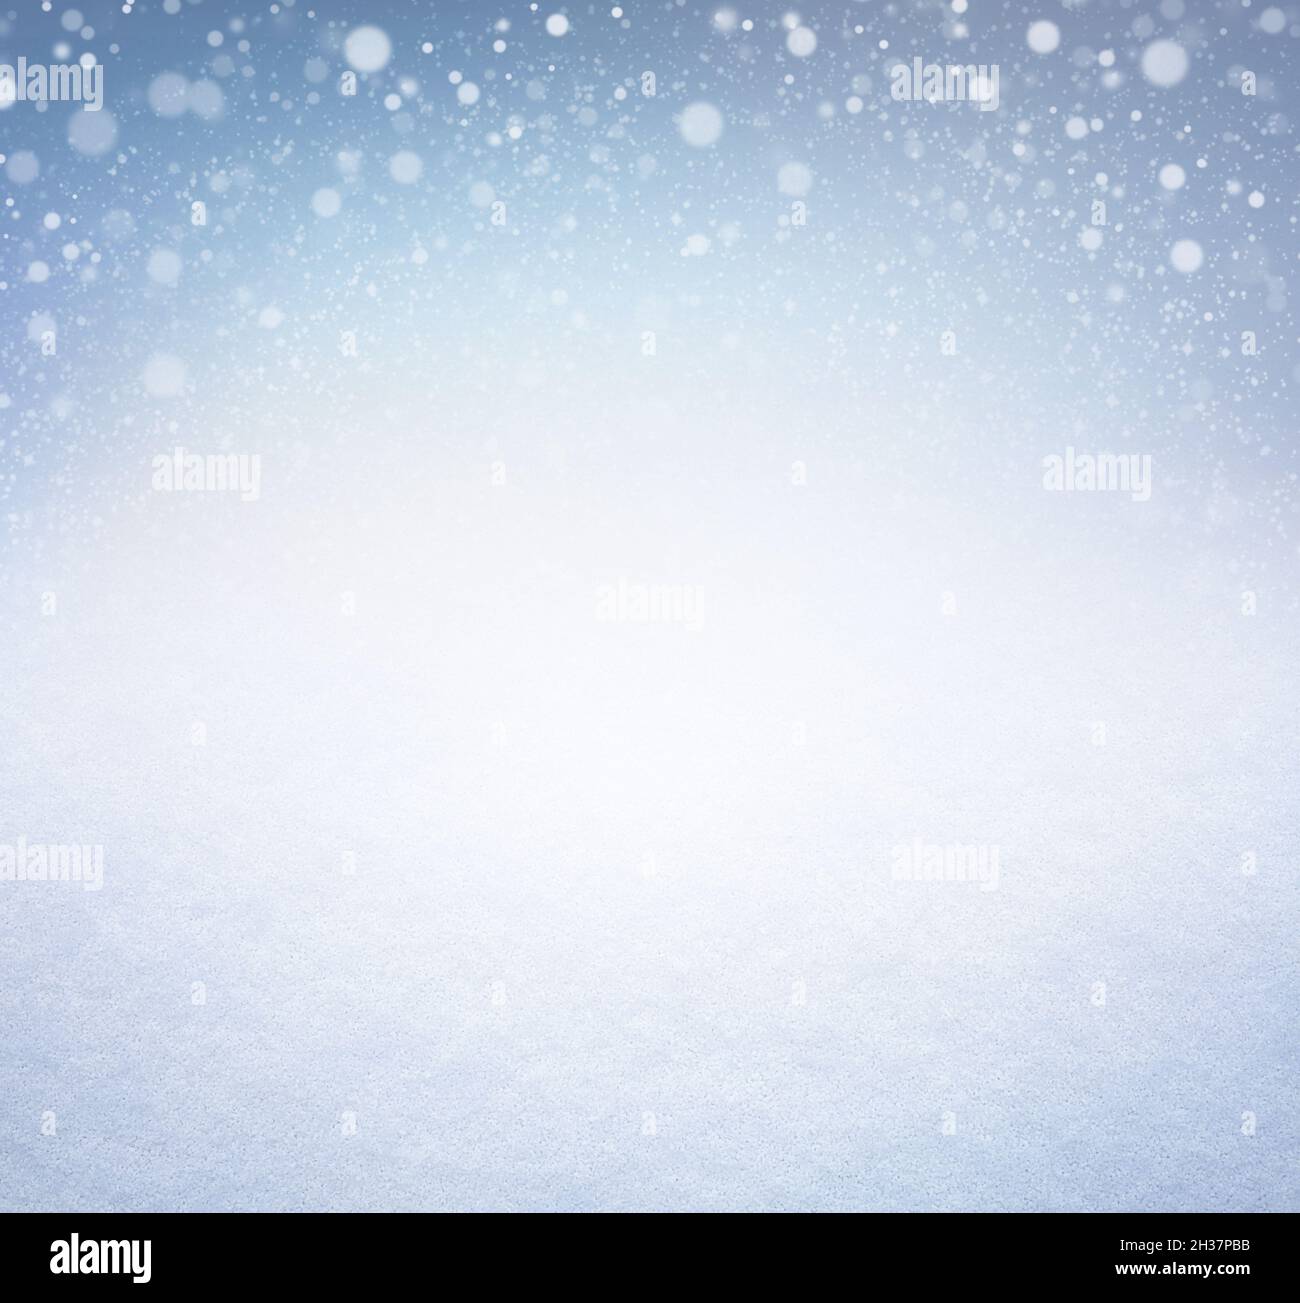 Snowfall and snowflakes on a white winter snow background. Christmas season material. Stock Photo